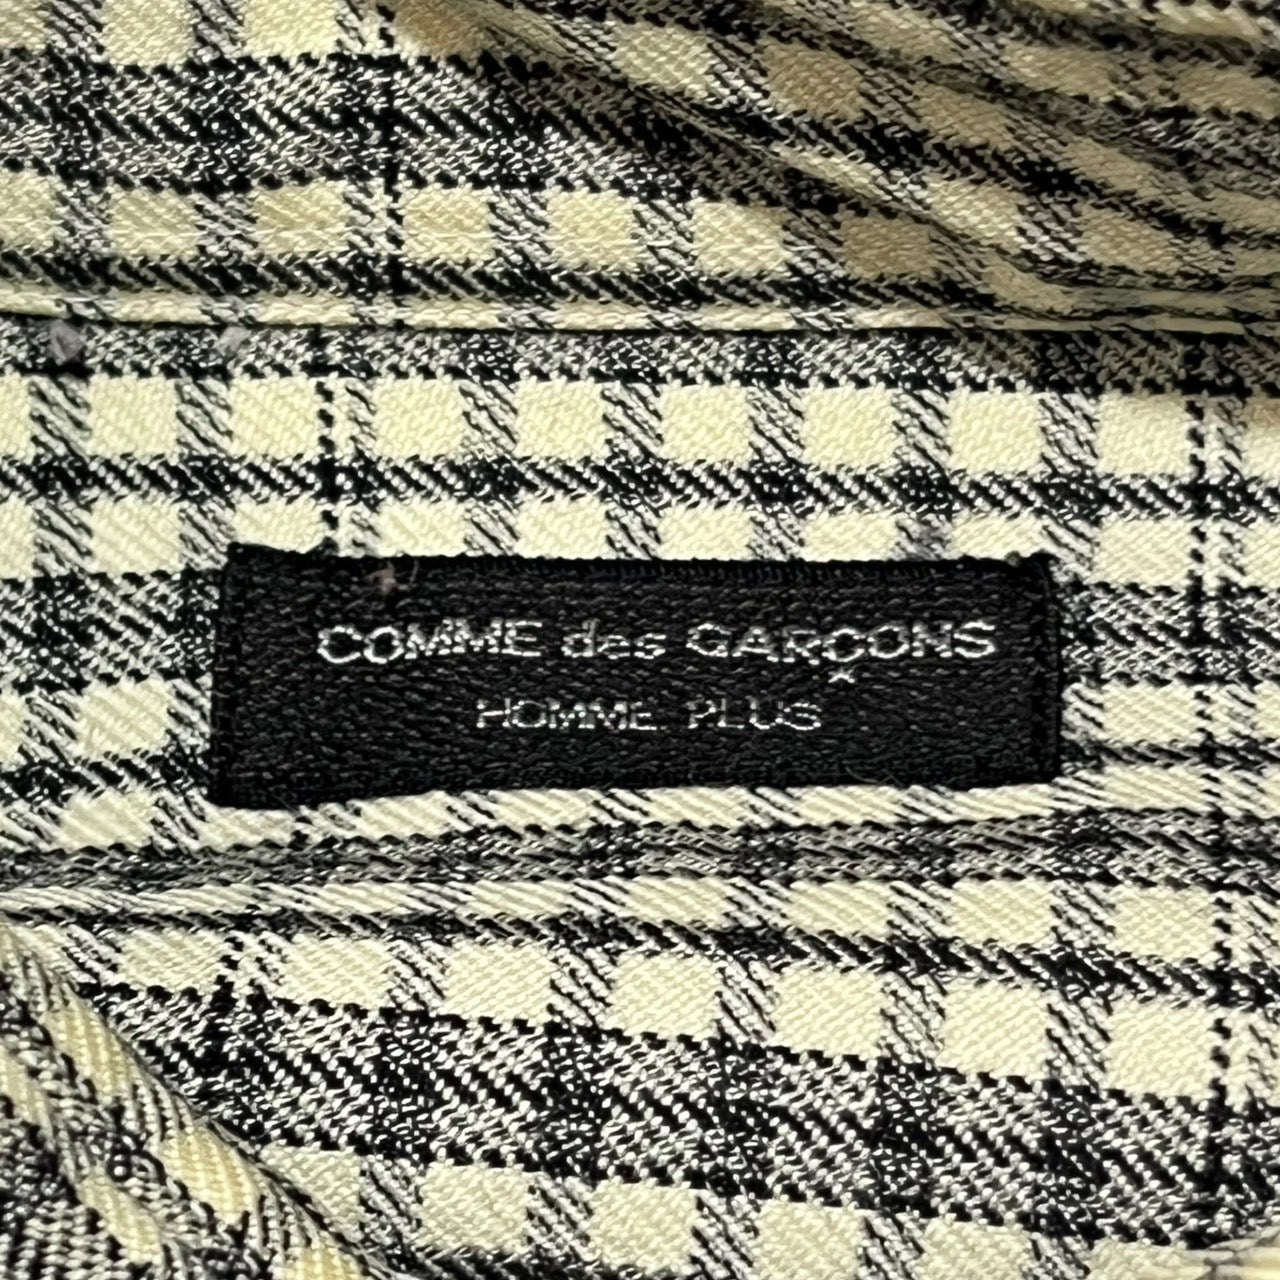 COMME des GARCONS HOMME PLUS(コムデギャルソンオムプリュス)  80's wide silhouette wool check shirt/ワイドシルエットウールチェックシャツ/80年代/ヴィンテージ PB-050010 SIZE FREE ホワイト×ブラック　本人期